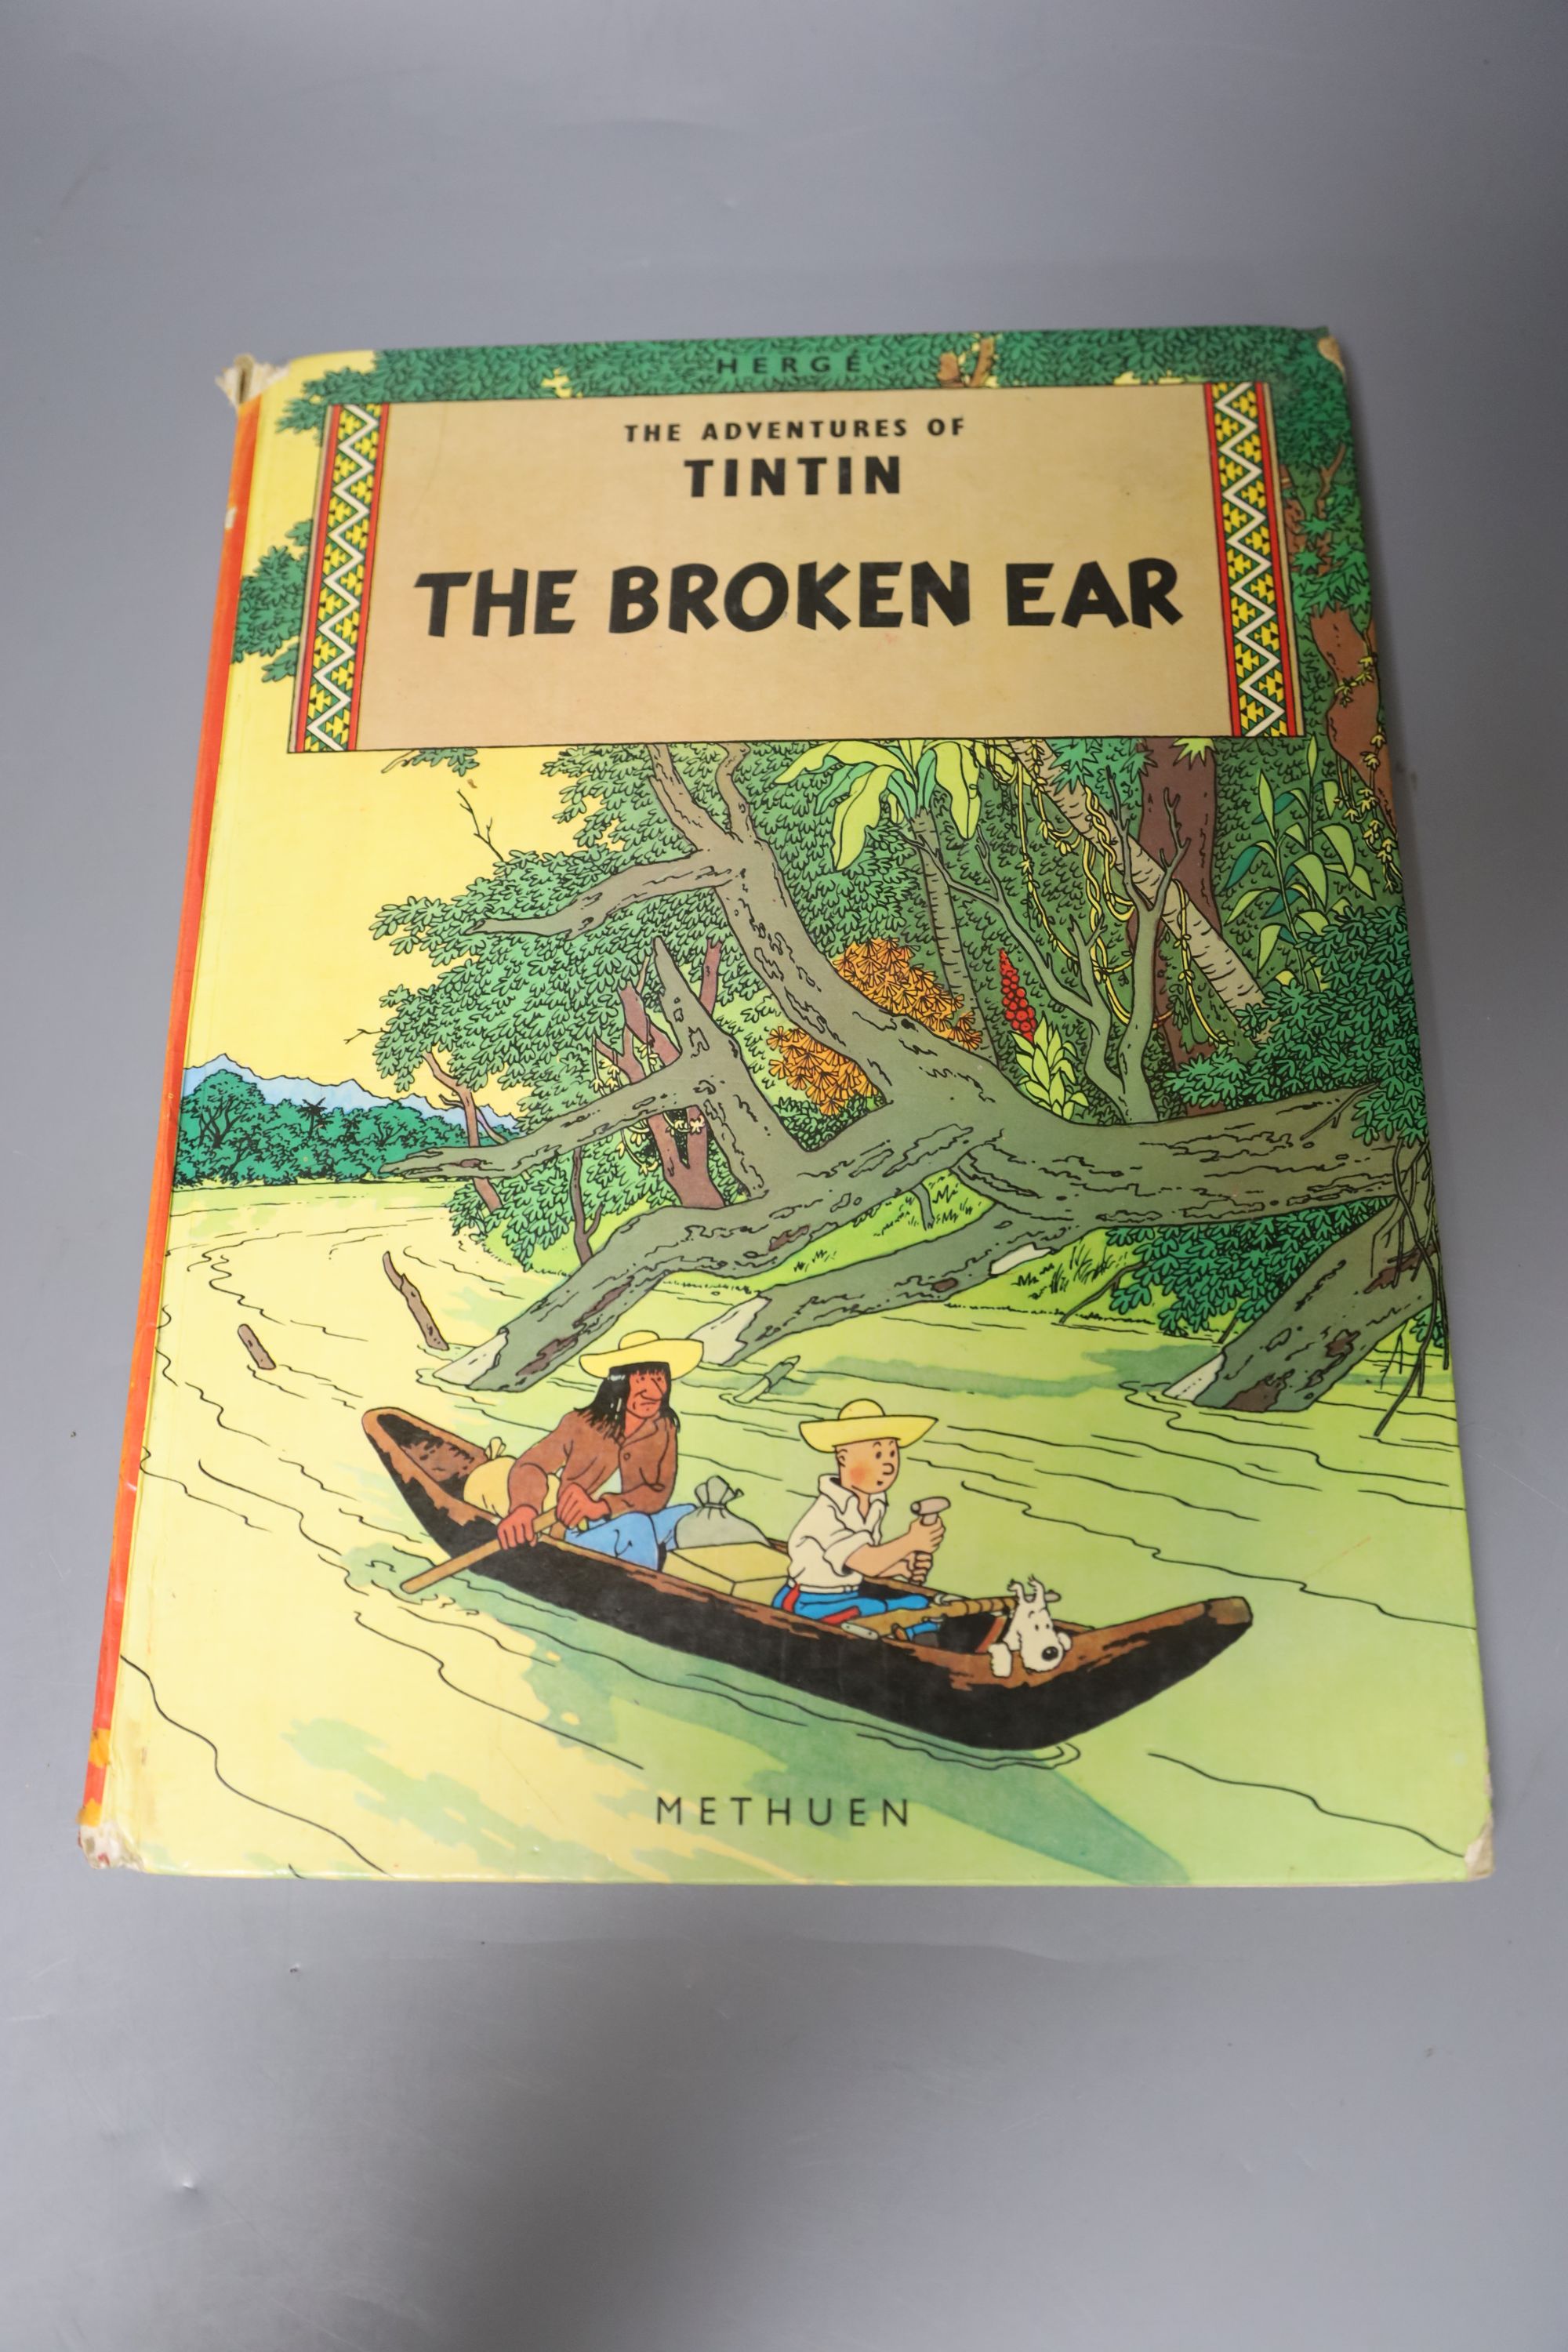 Herge (Remi, George Prosper), Three Works - Les Adventures of Tintin, LOreille Casse, pictorial boards, Casterman, Paris 1947; Tintin